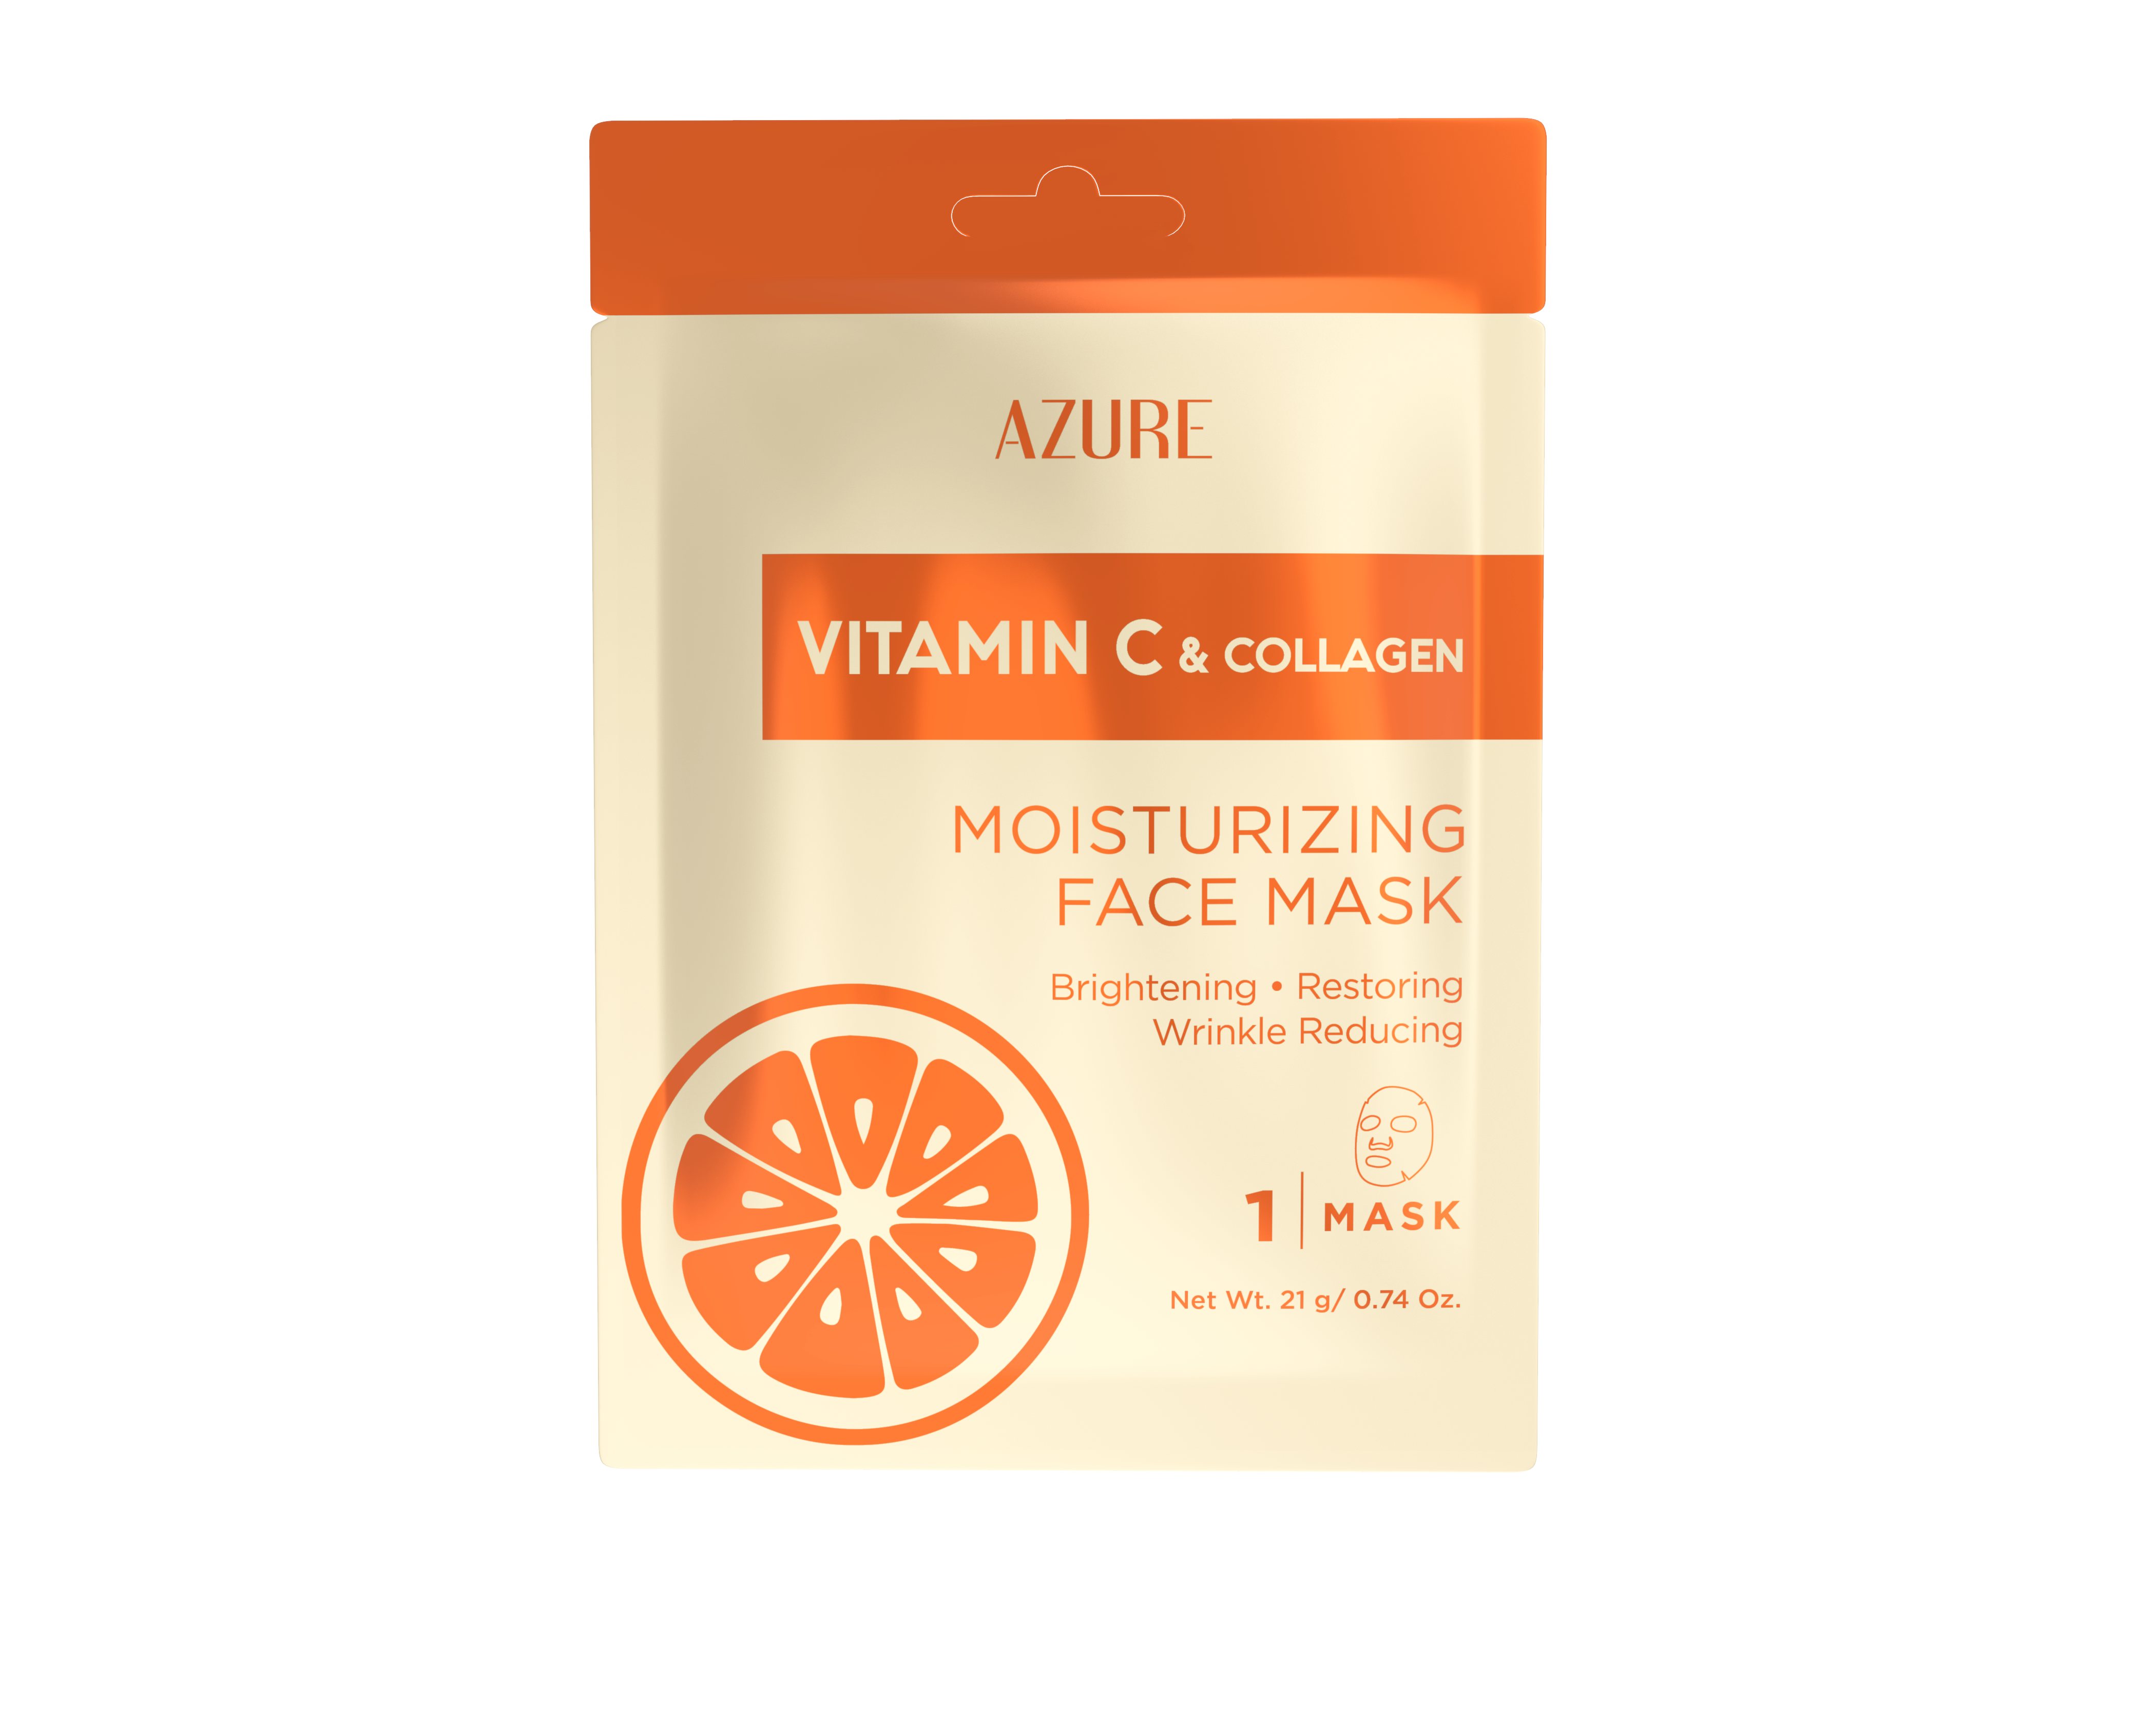 AZURE Vitamin C & Collagen Moisturizing Facial Sheet Mask